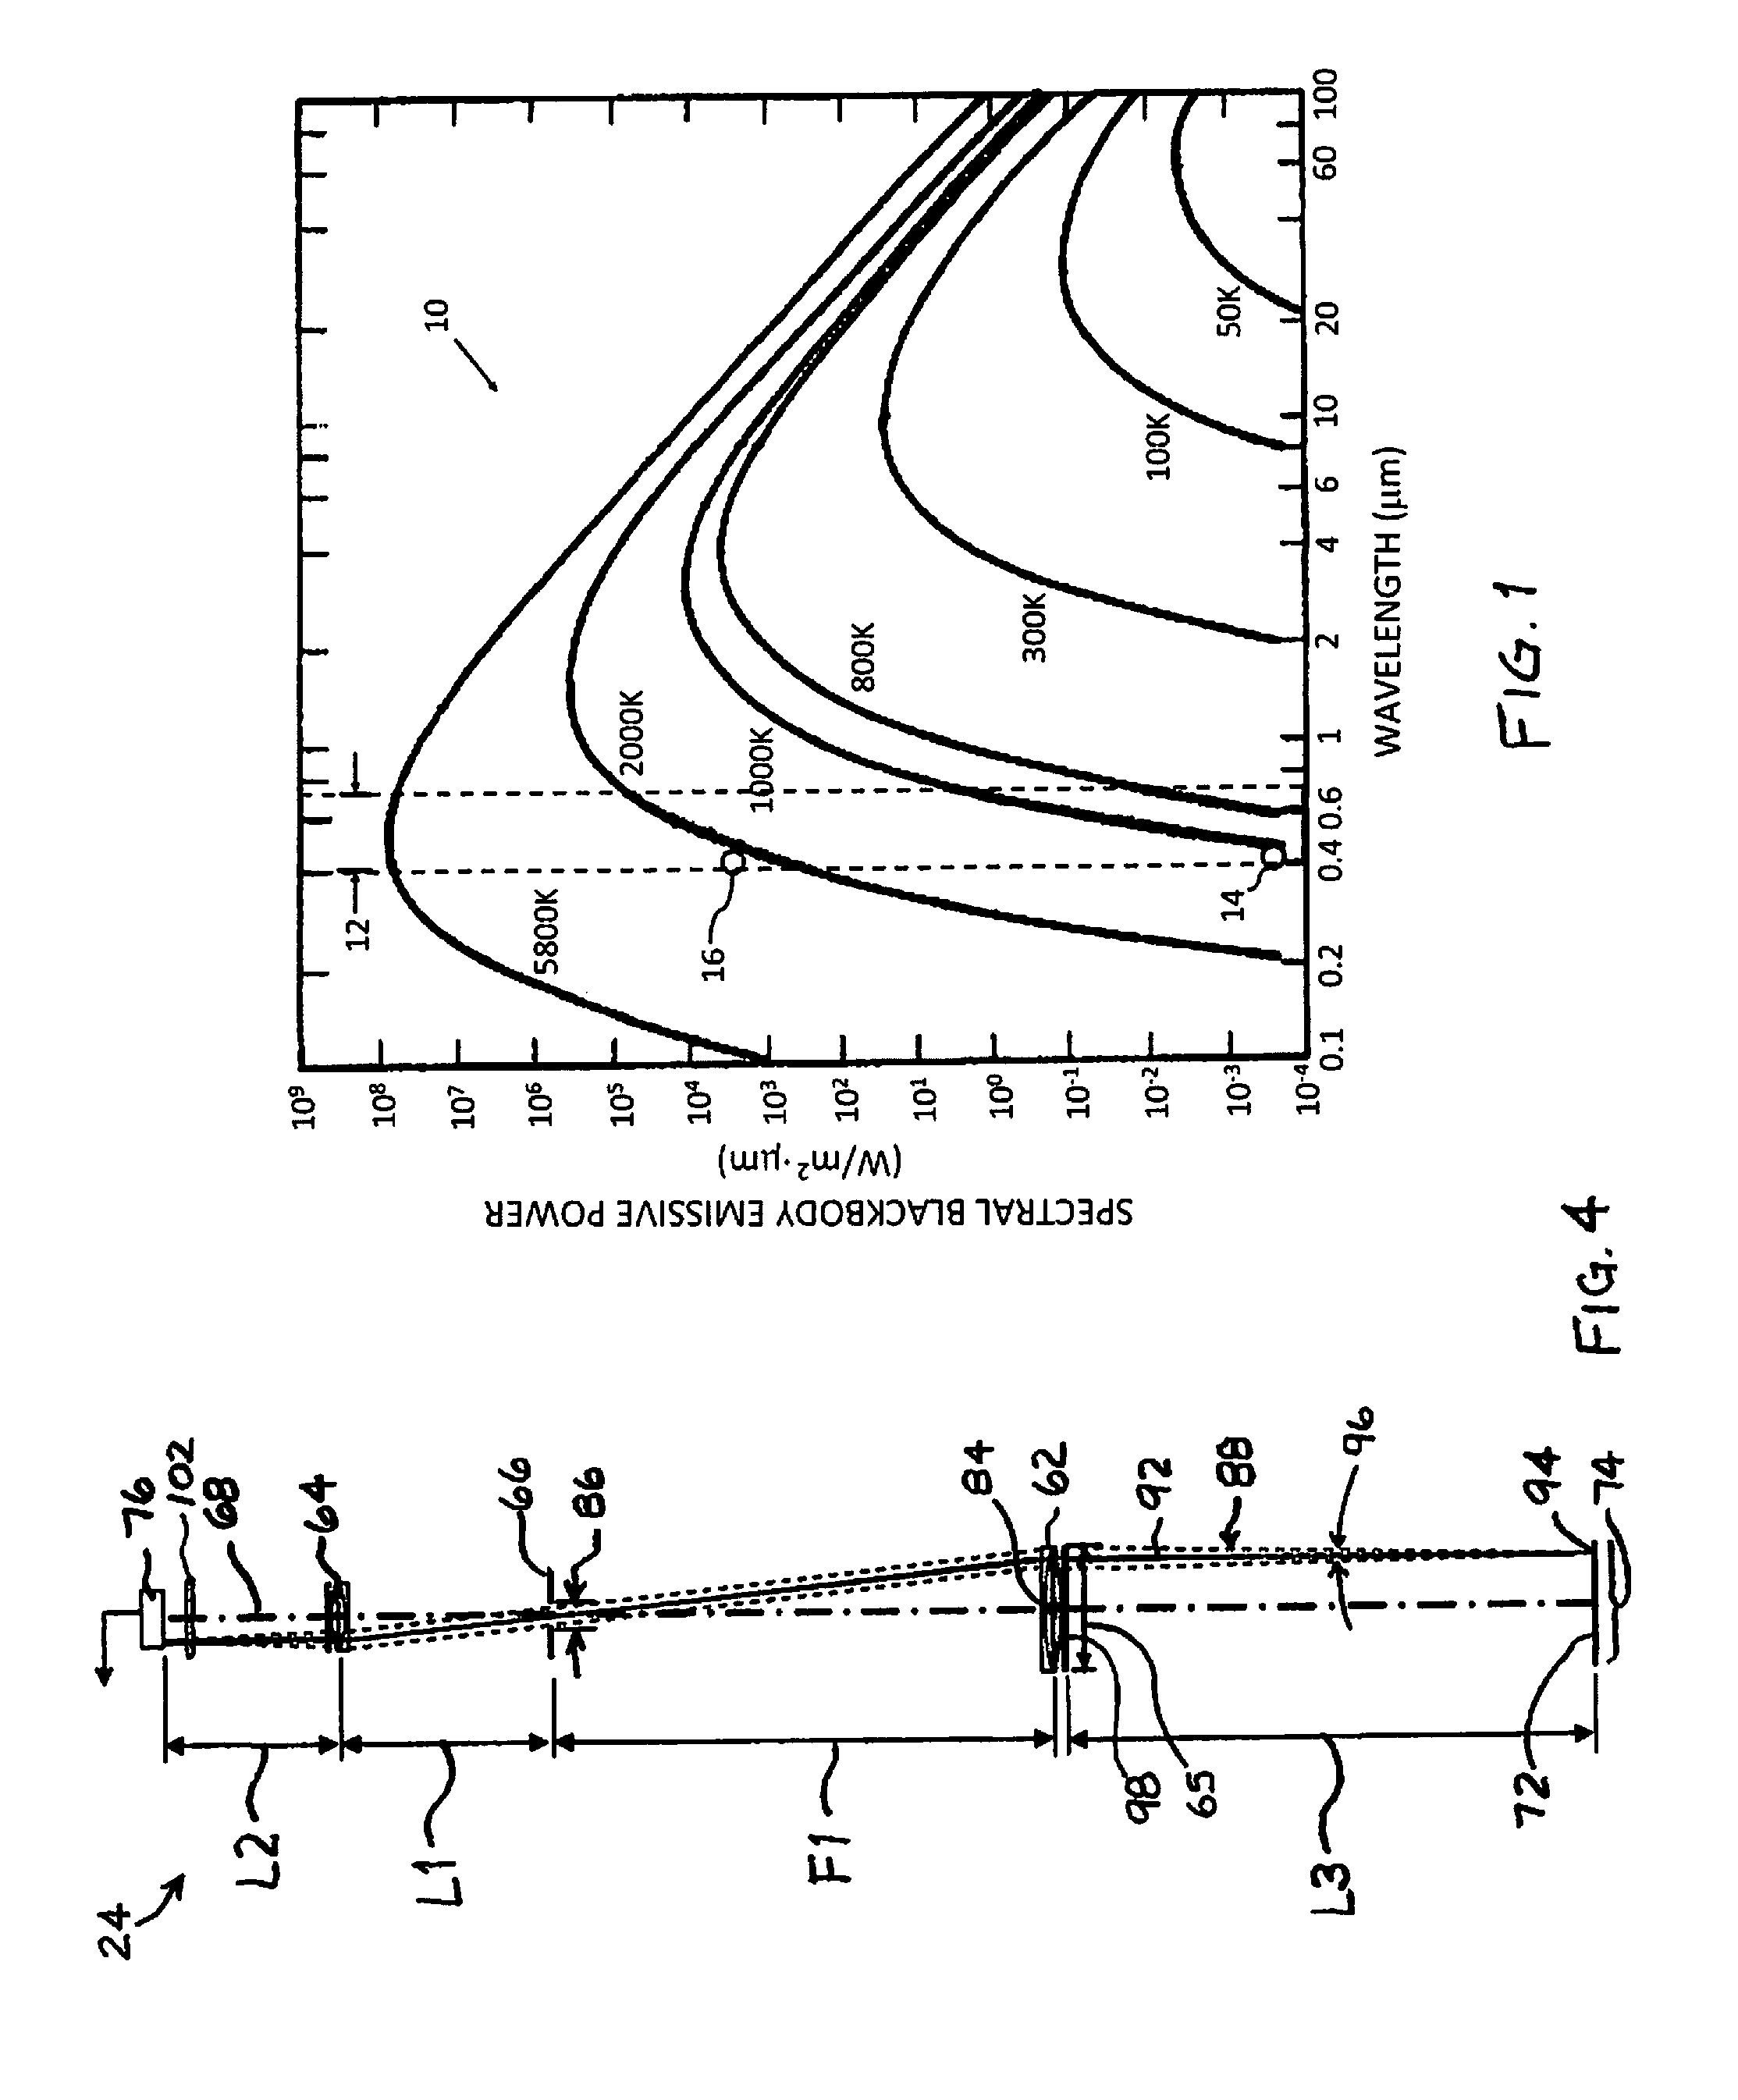 Radiation thermometer using off-focus telecentric optics